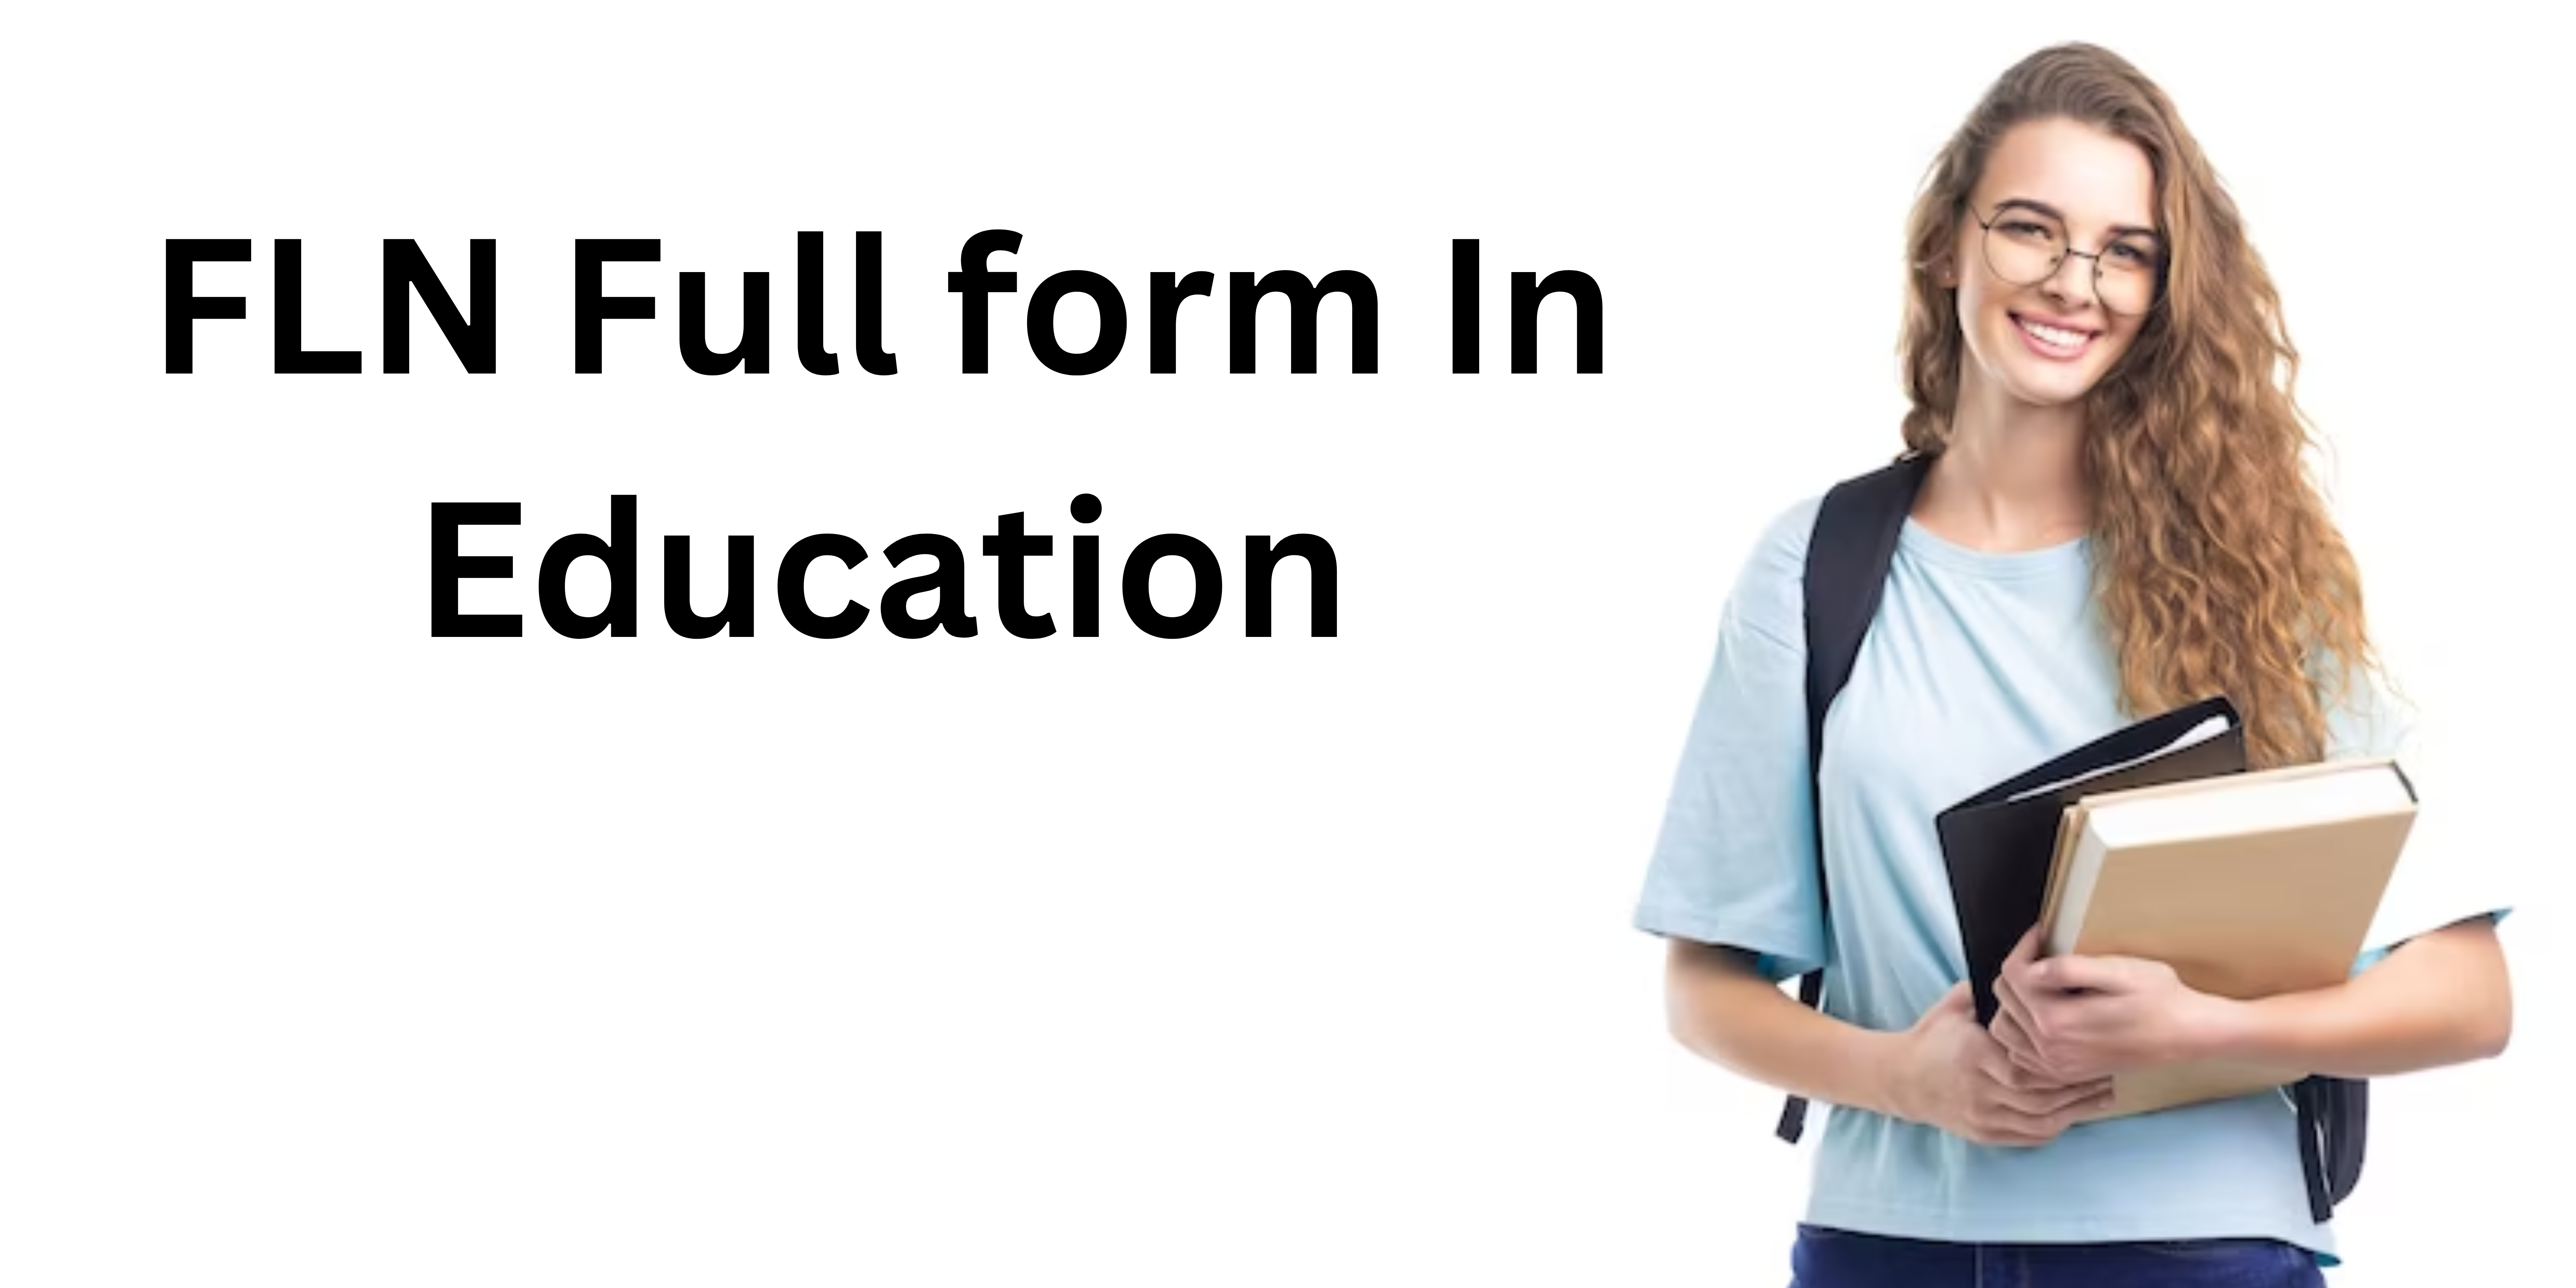 FLN Full form In Education